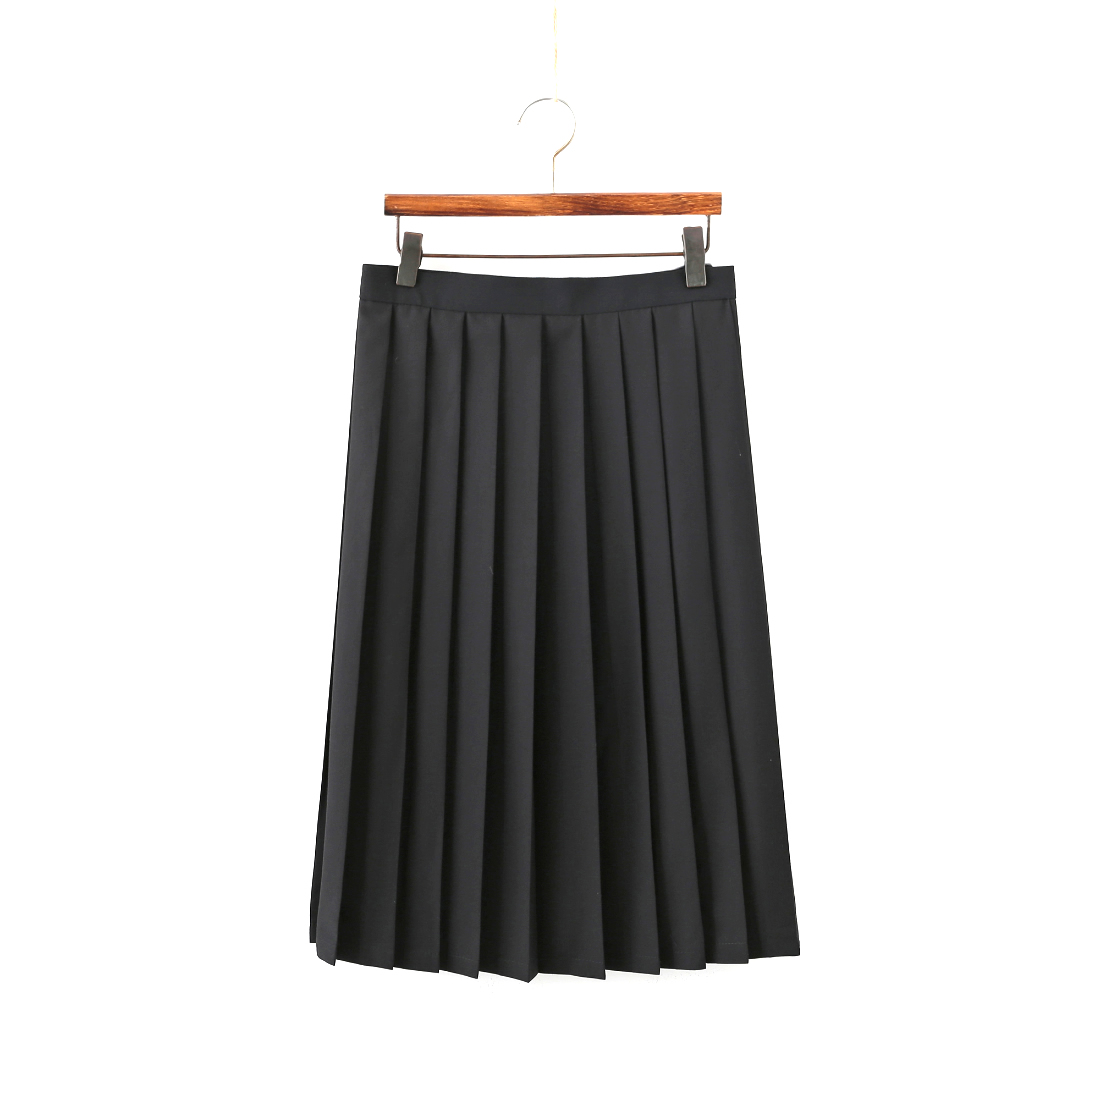 Black, medium length skirt (65cm)